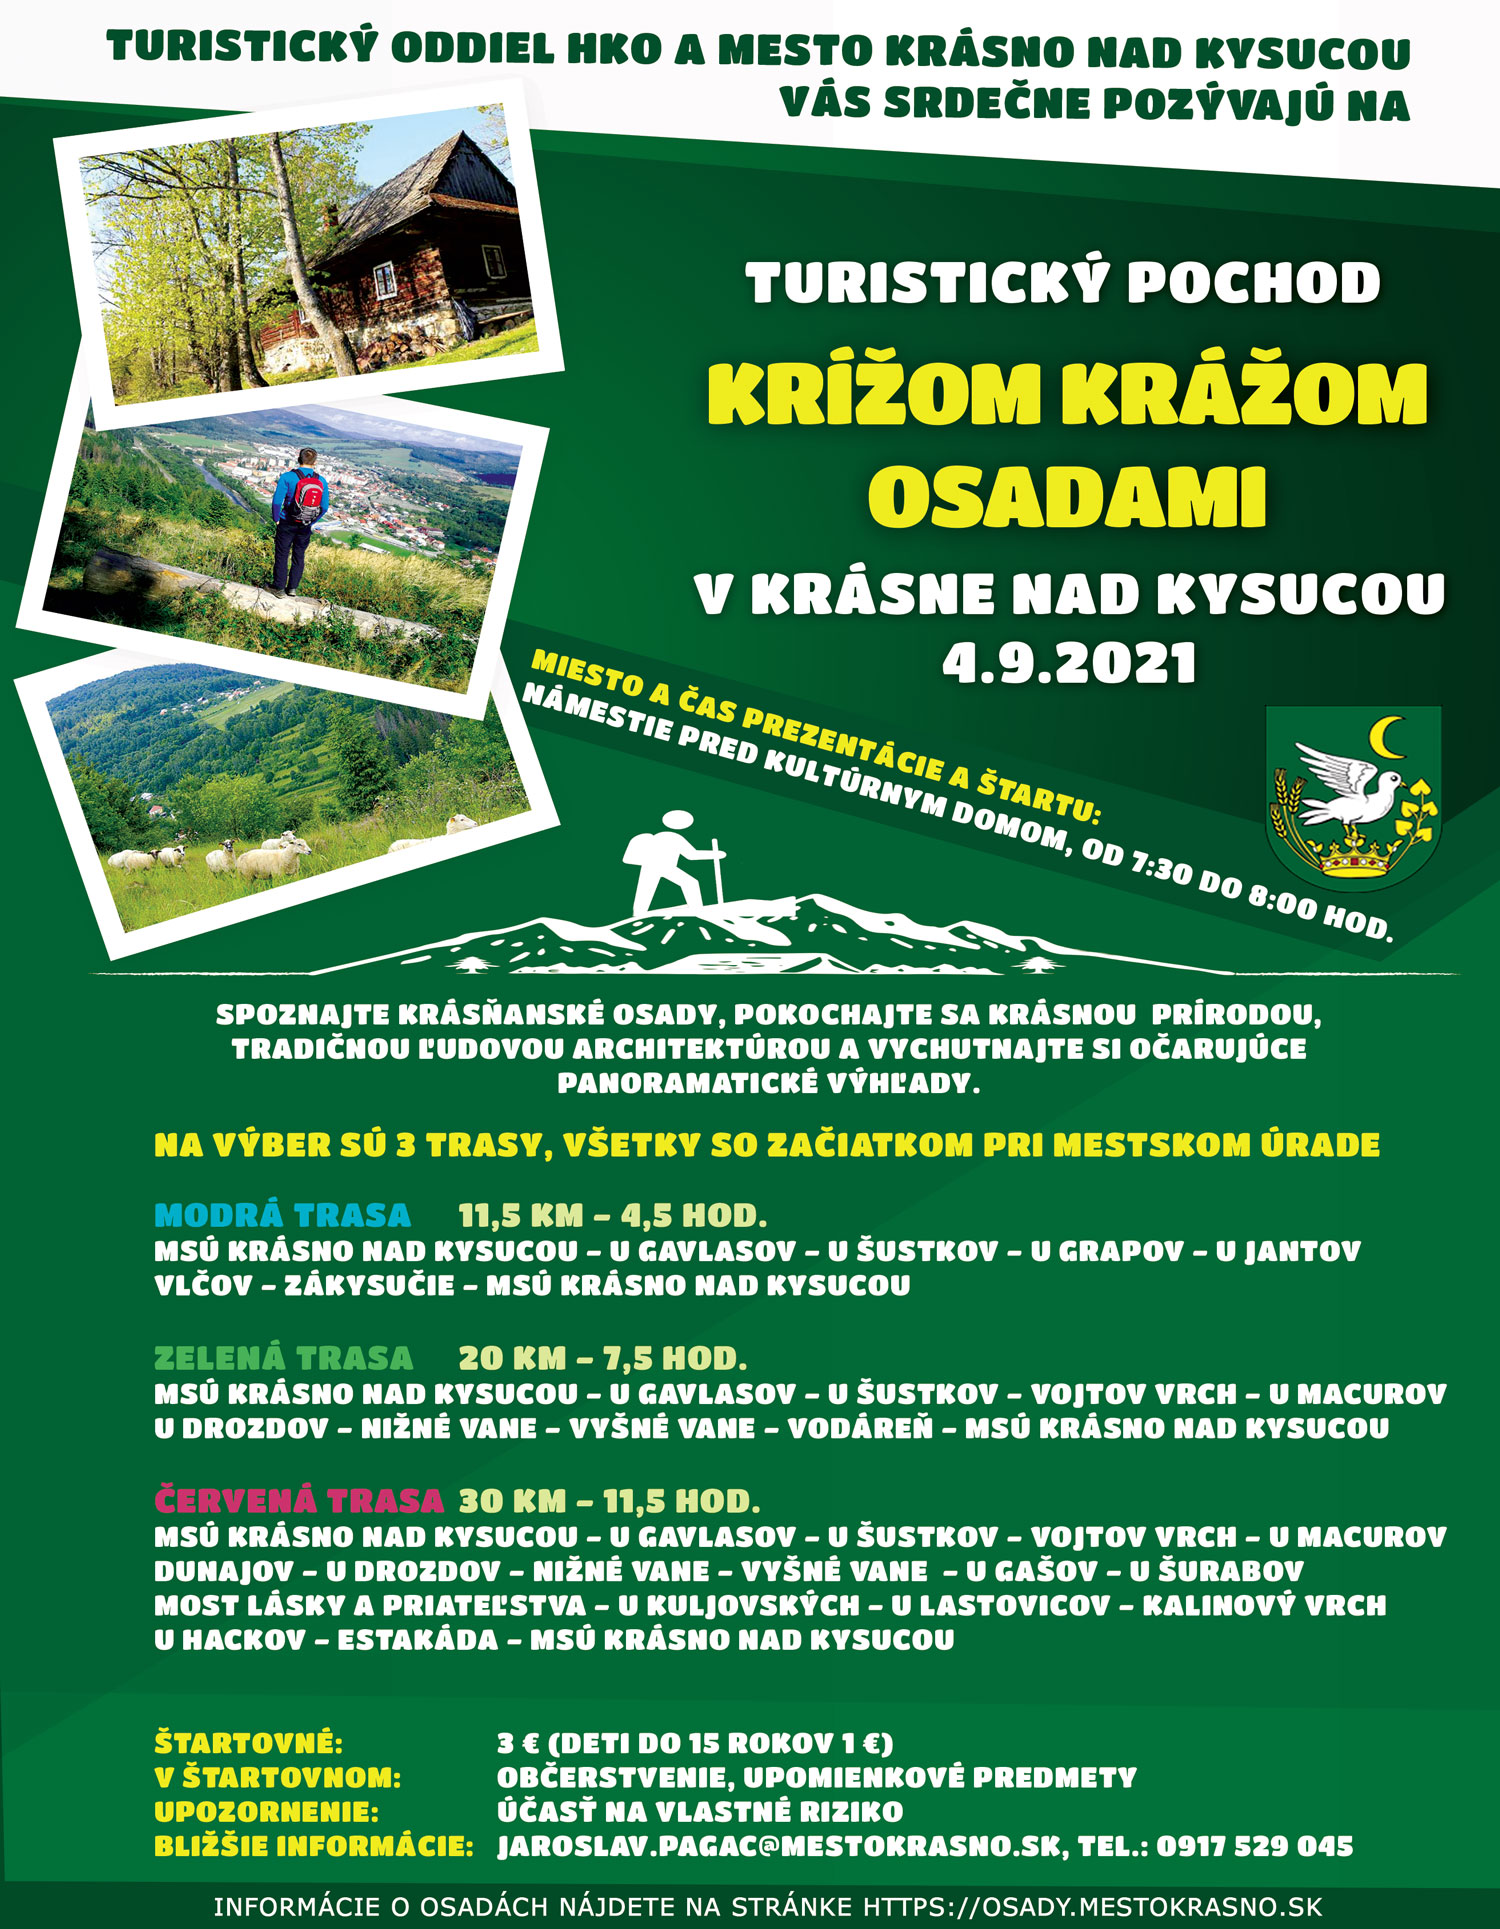 NOV - - - Turistick pochod Krom krom osadami 2021 Krsno nad Kysucou